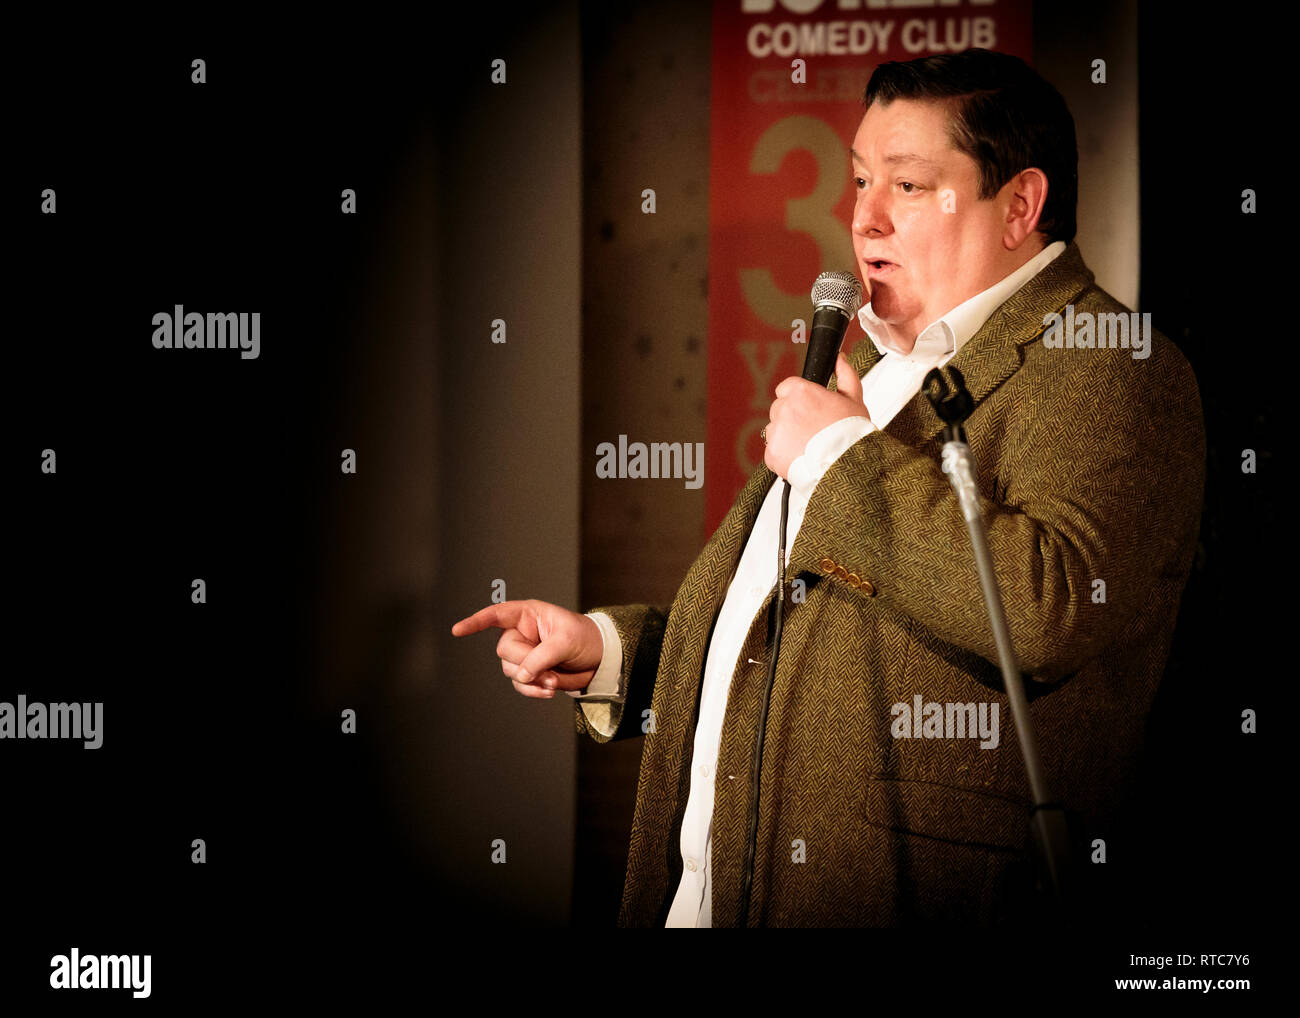 John Moloney, Joker Comedy Club, Southend, Essex © Clarissa Debenham / Alamy Stock Photo